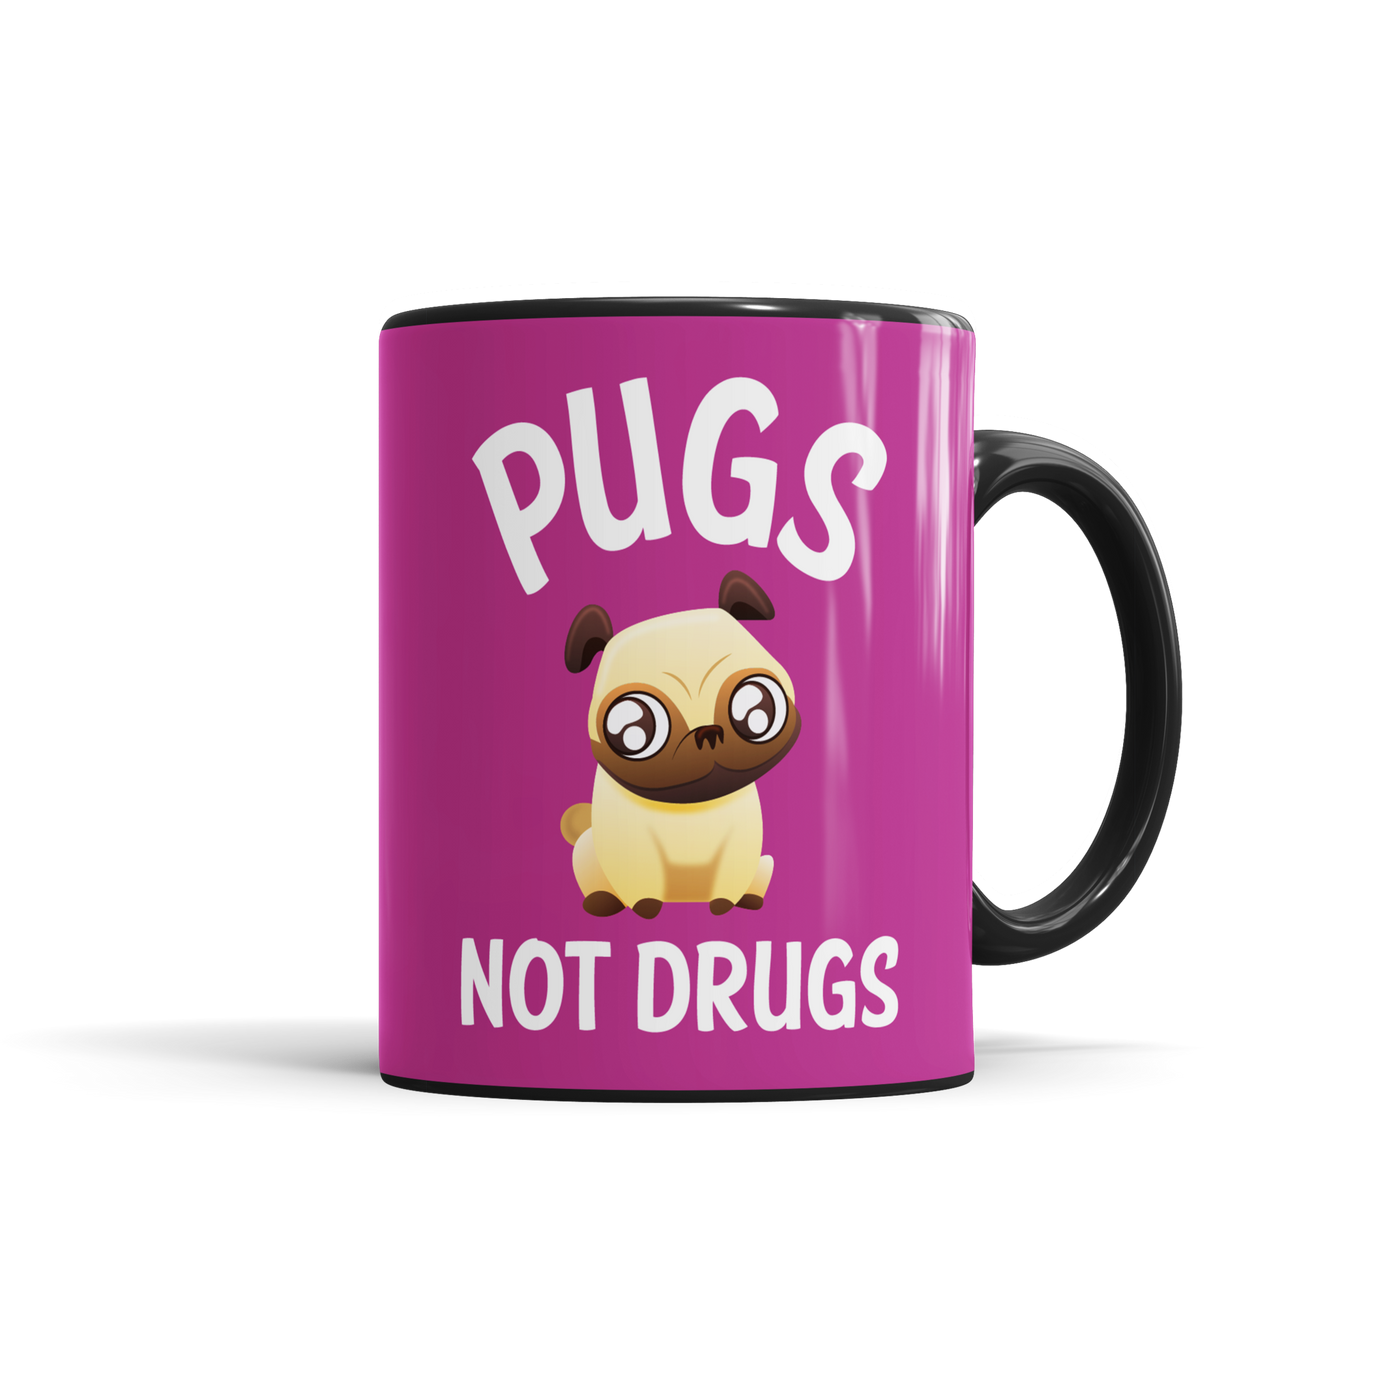 Pugs, Not Drugs